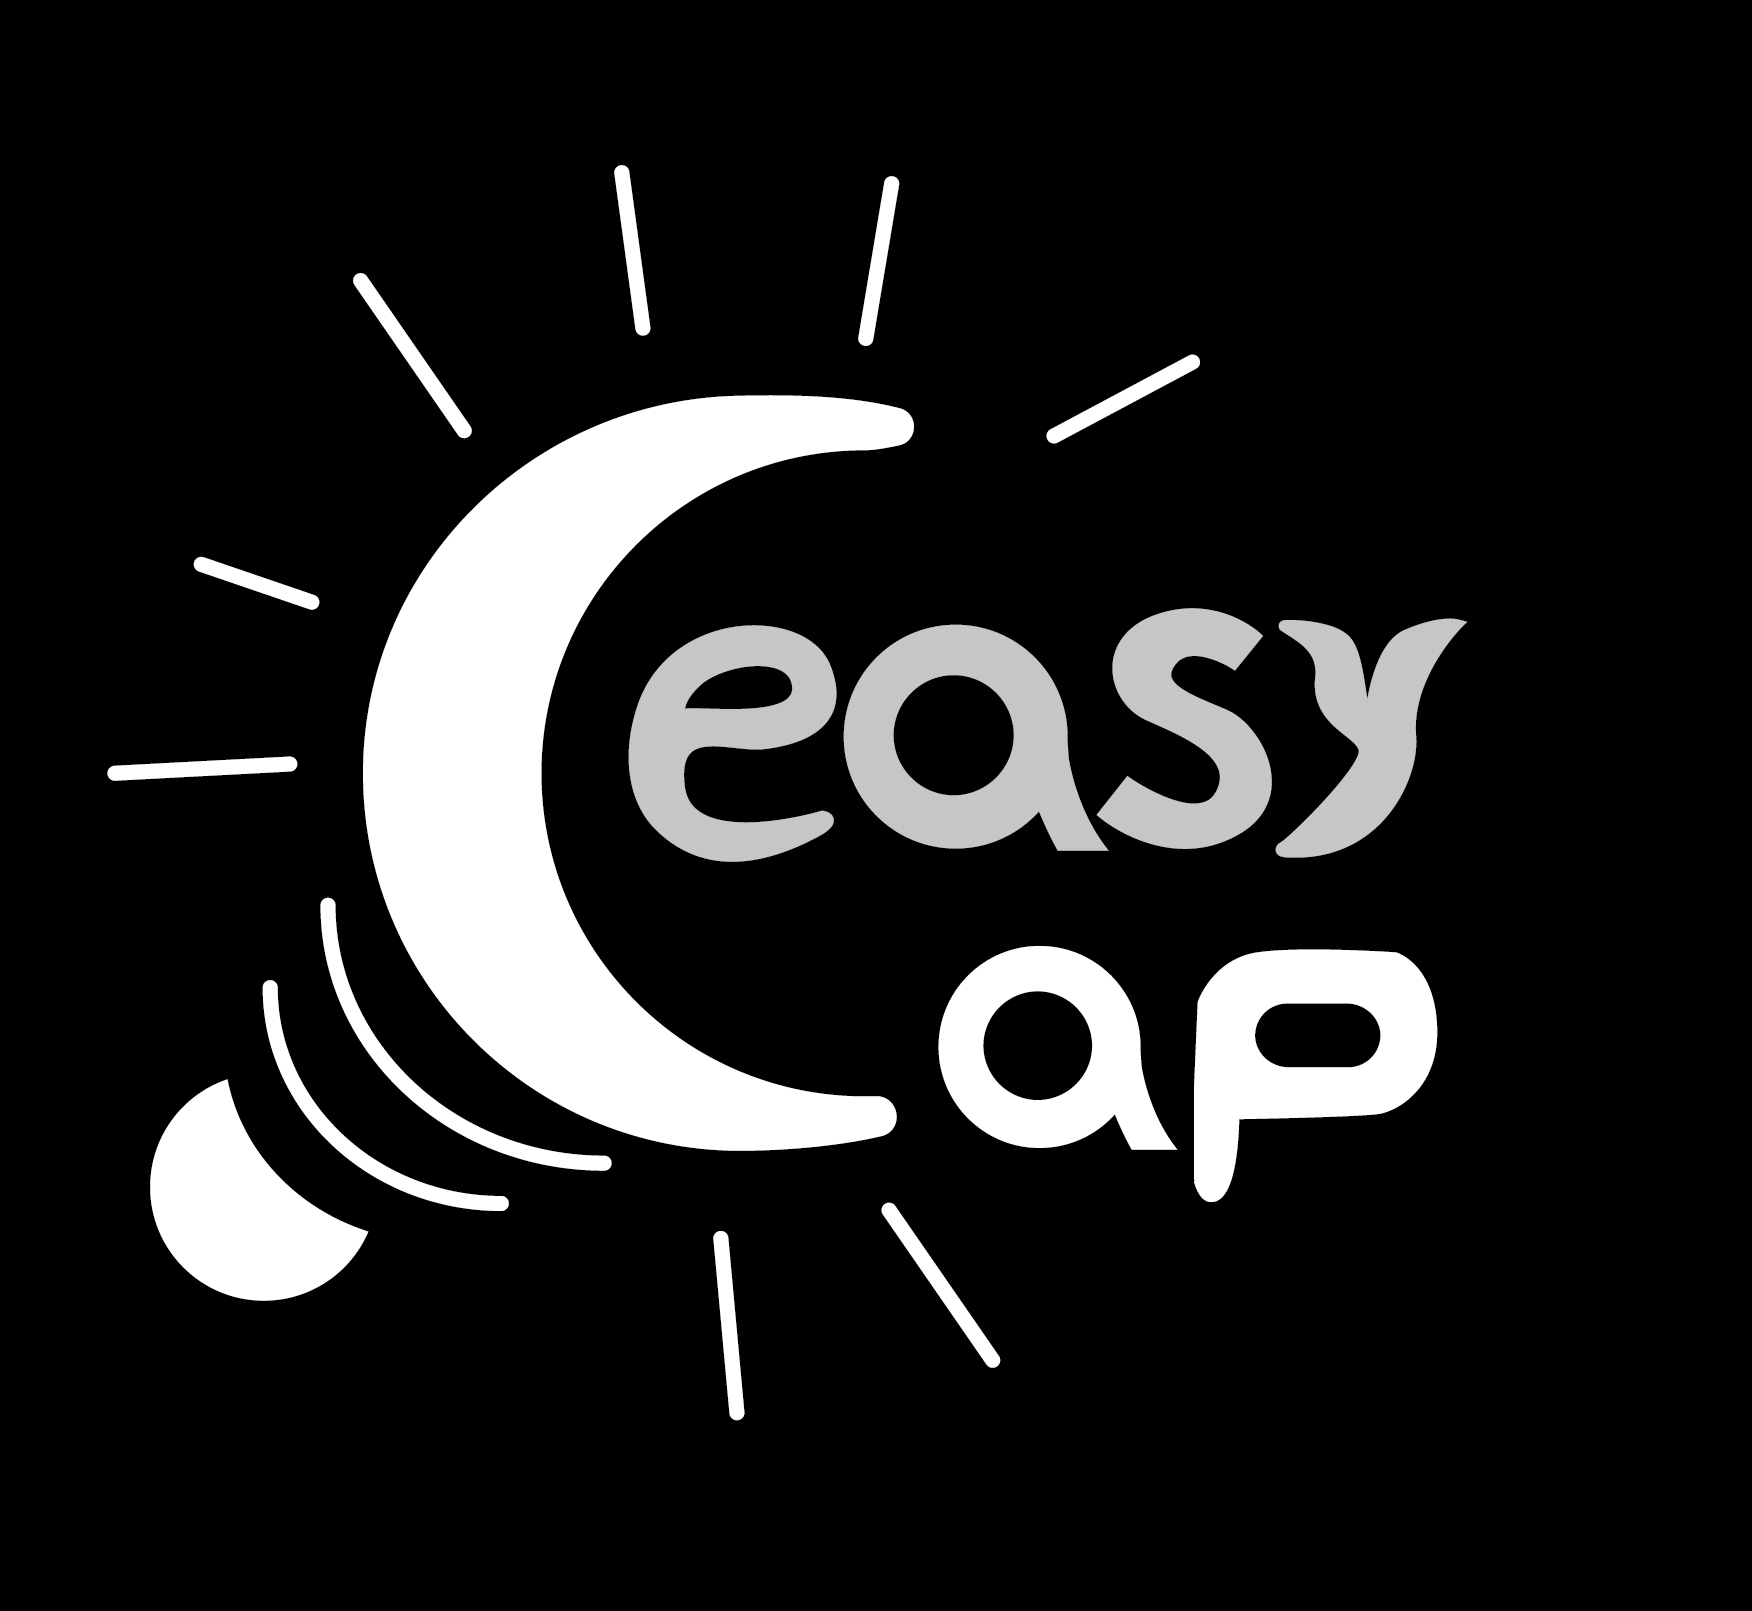 logo easycap